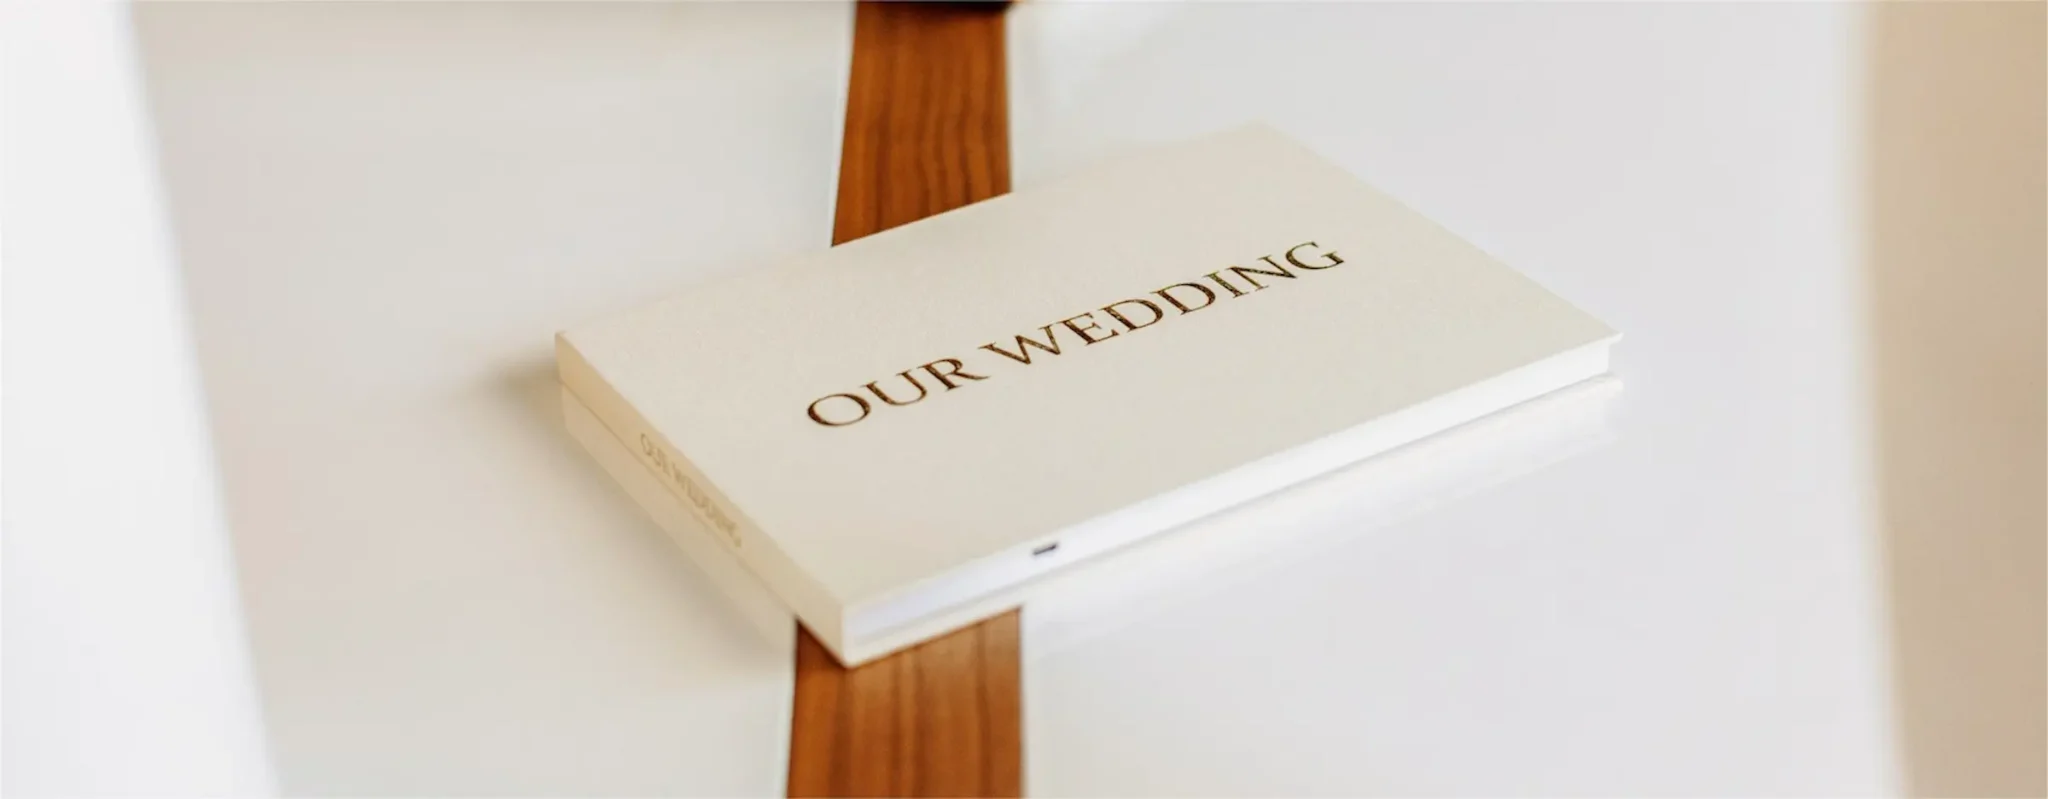 Our Wedding Video Book Digital Video Frame